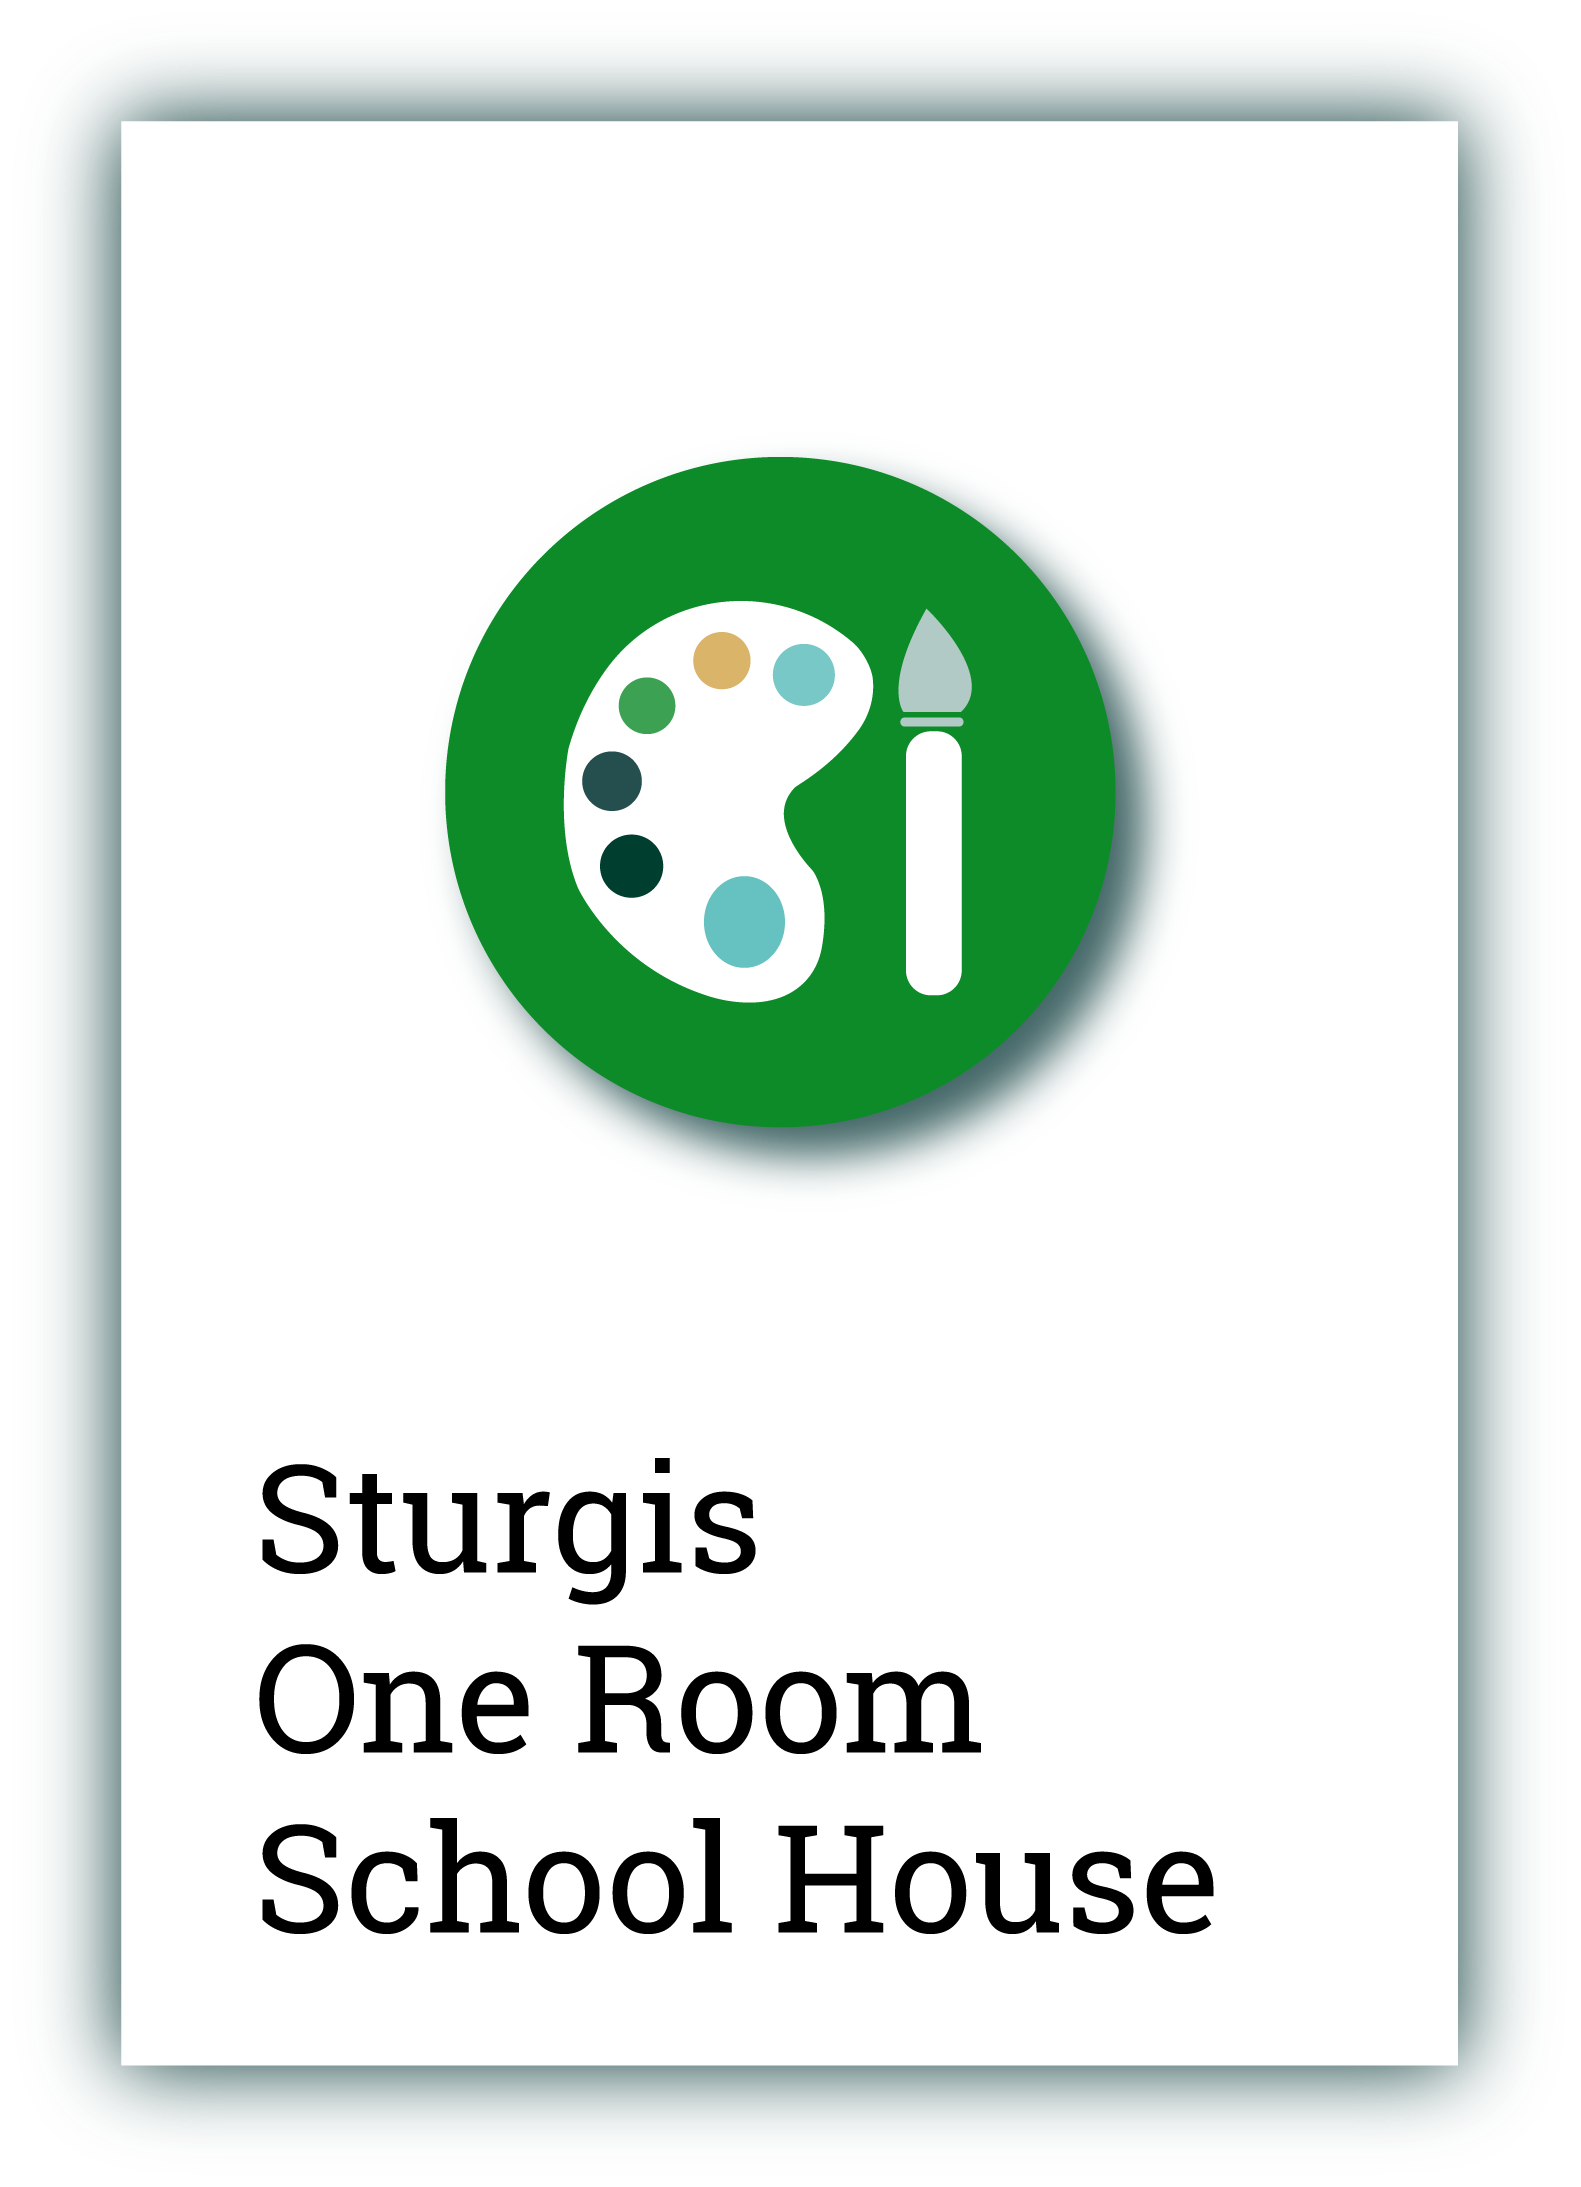 Sturgis One Room School House